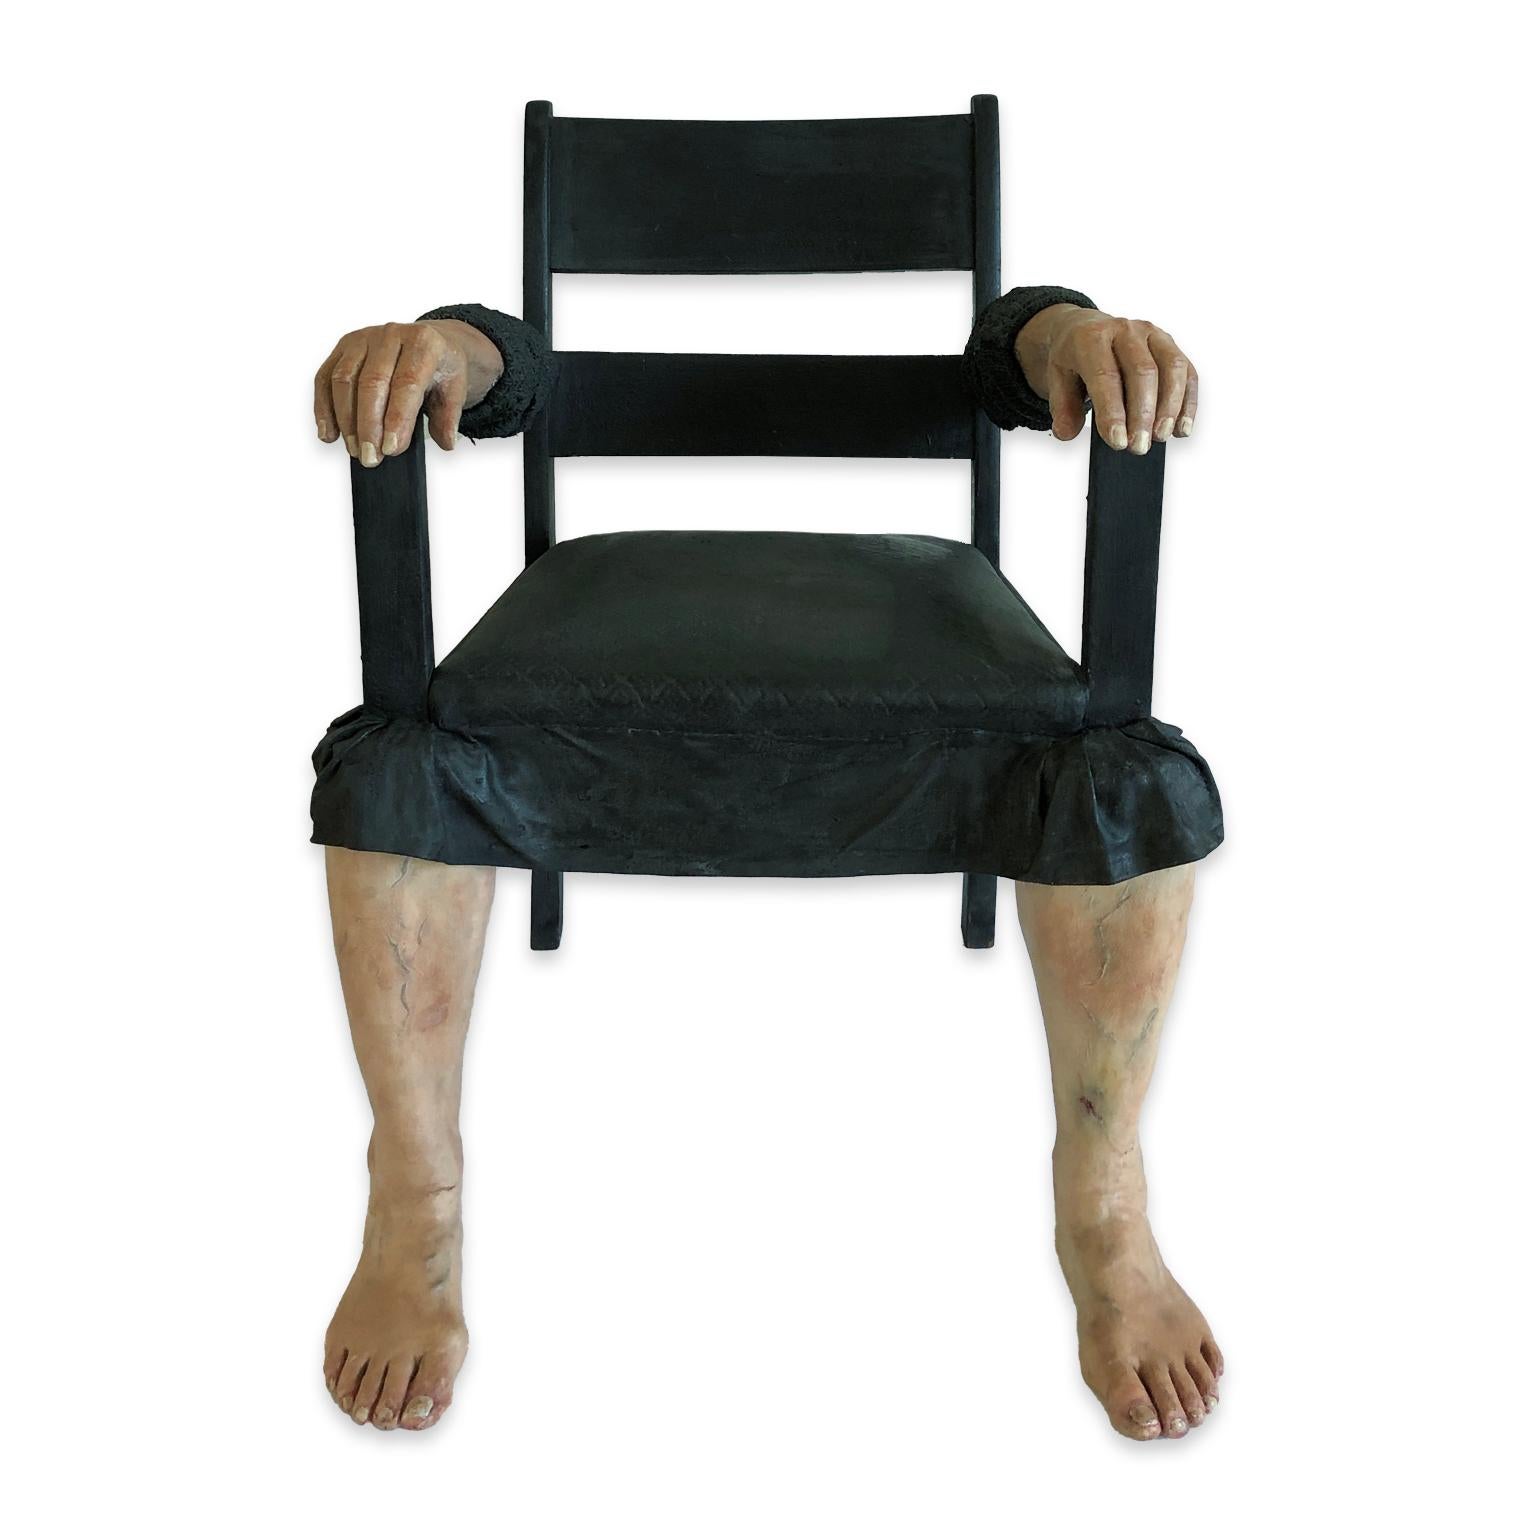 Miriam Meulepas Figurative Sculpture - Figurative Contemporary Object - Chair with legs